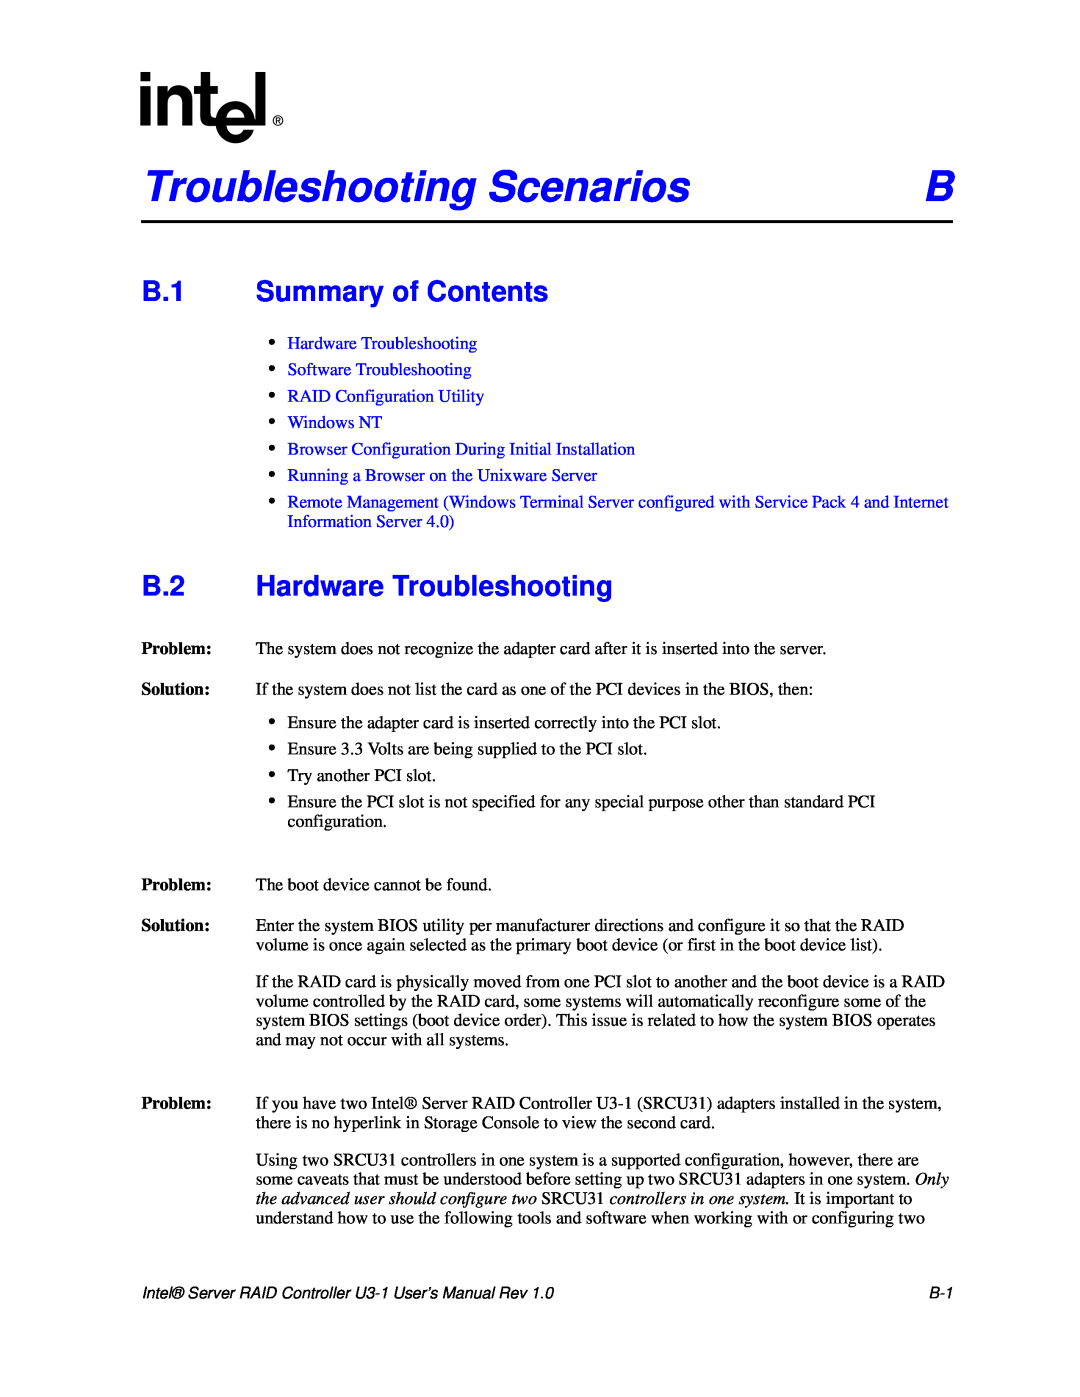 Intel SRCU31 user manual Troubleshooting Scenarios, B.1 Summary of Contents, B.2 Hardware Troubleshooting 